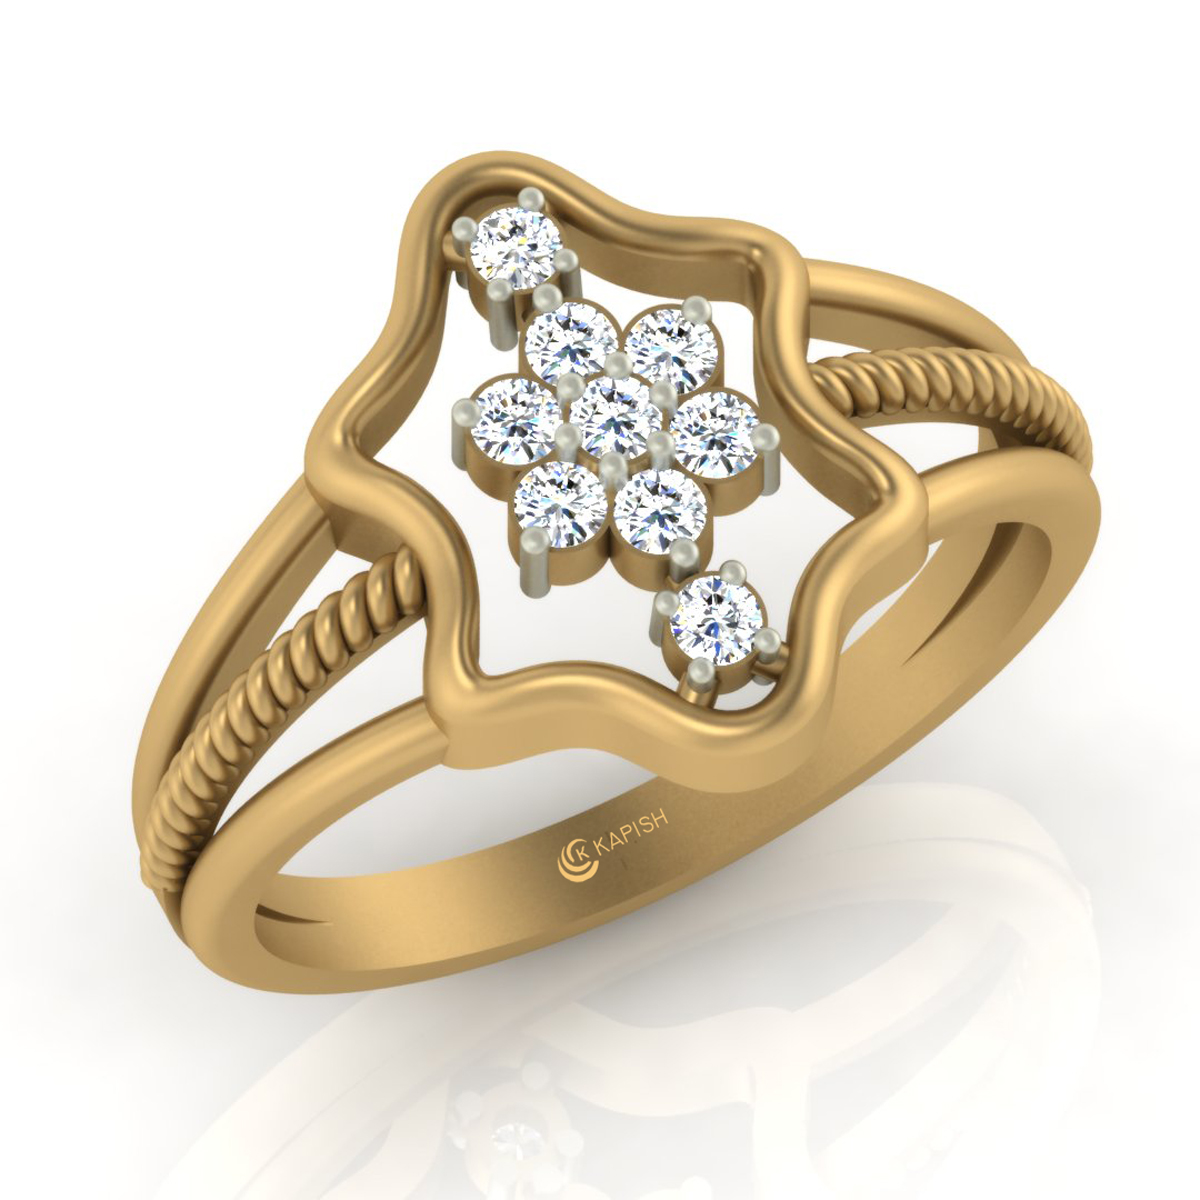 Buy Bling Trio Diamond Ring Online in India | Kasturi Diamond